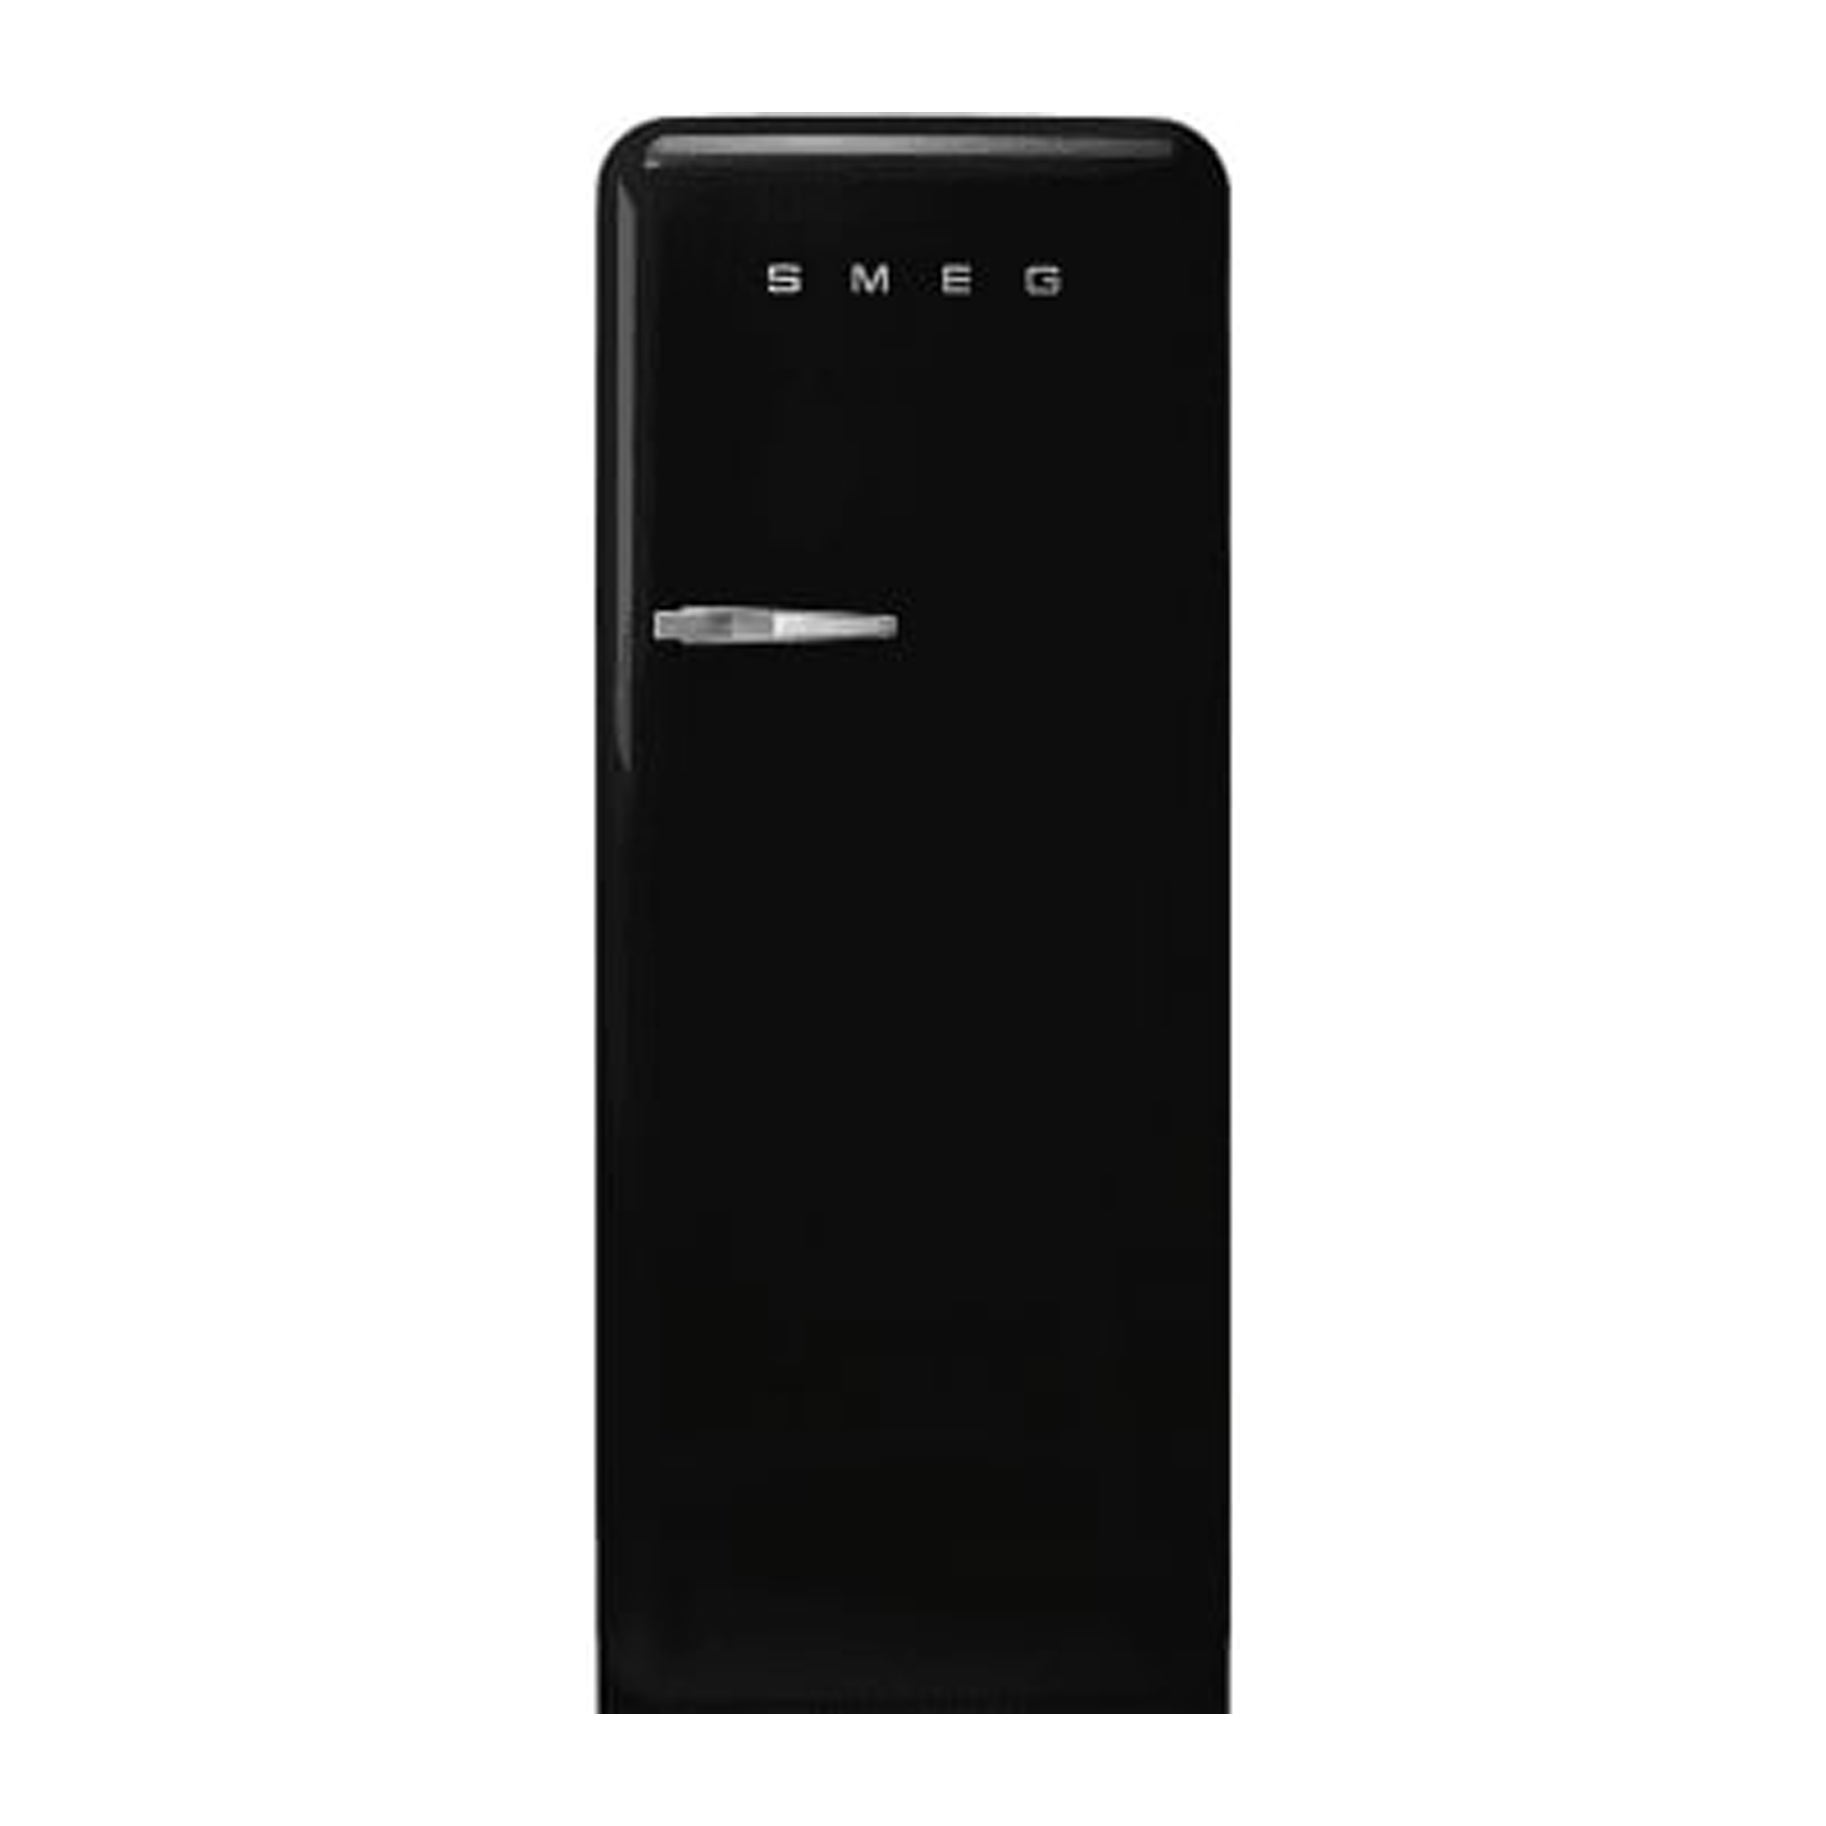 Retro Design Refrigerator Domino